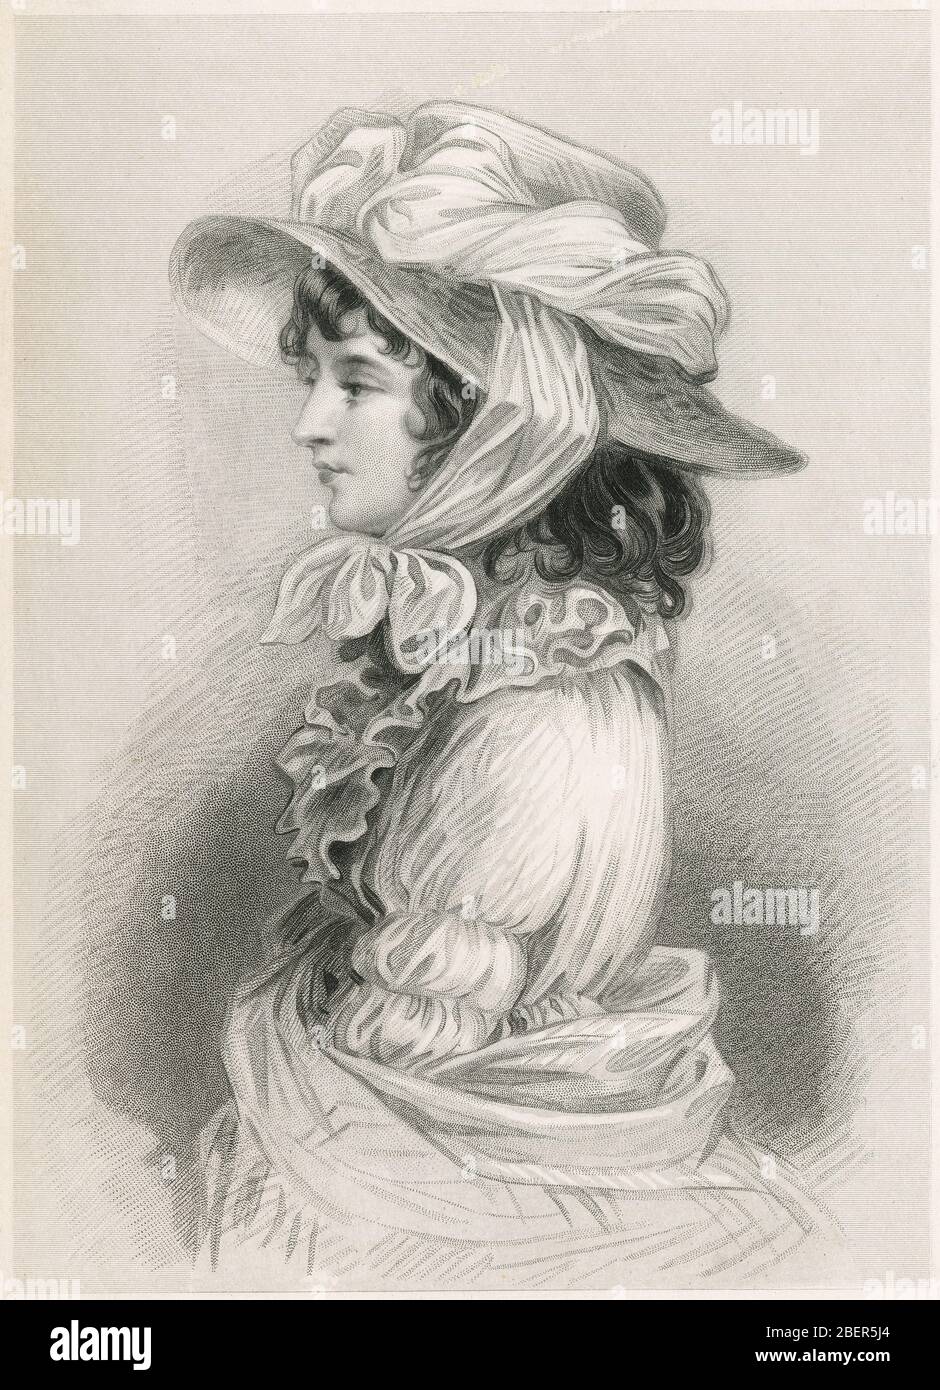 Antique engraving, Sarah Livingston Jay. Sarah Van Brugh Livingston Jay (1756-1802) was an American socialite and wife of founding father John Jay. SOURCE: ORIGINAL ENGRAVING Stock Photo